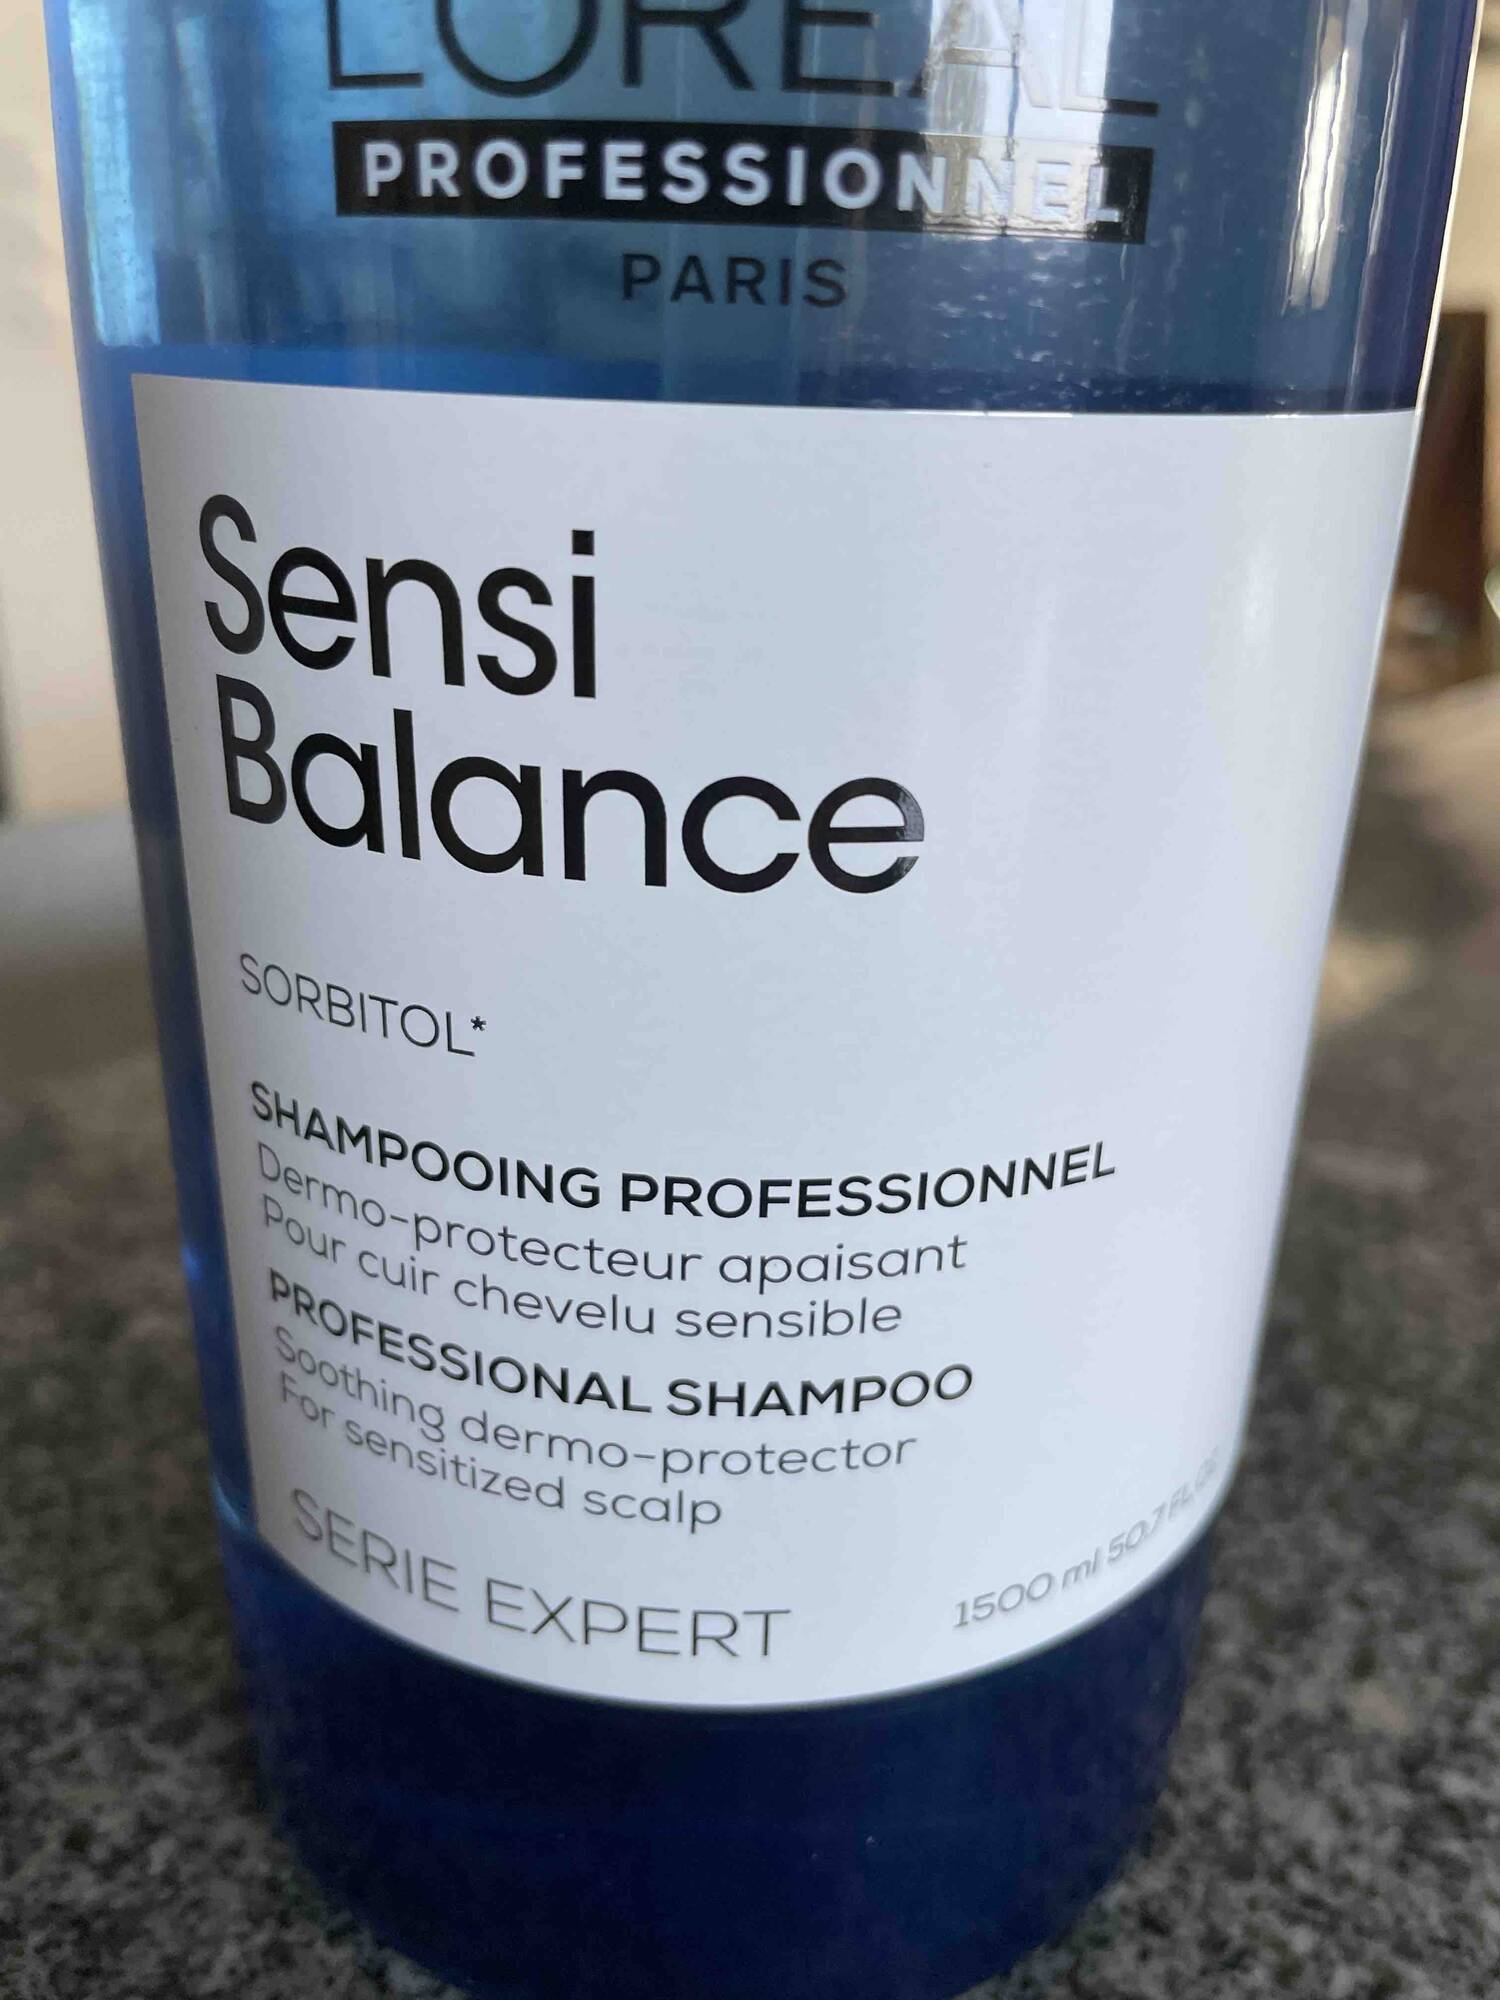 L'ORÉAL PROFESSIONNEL - Sensi balance - Shampooing professionnel